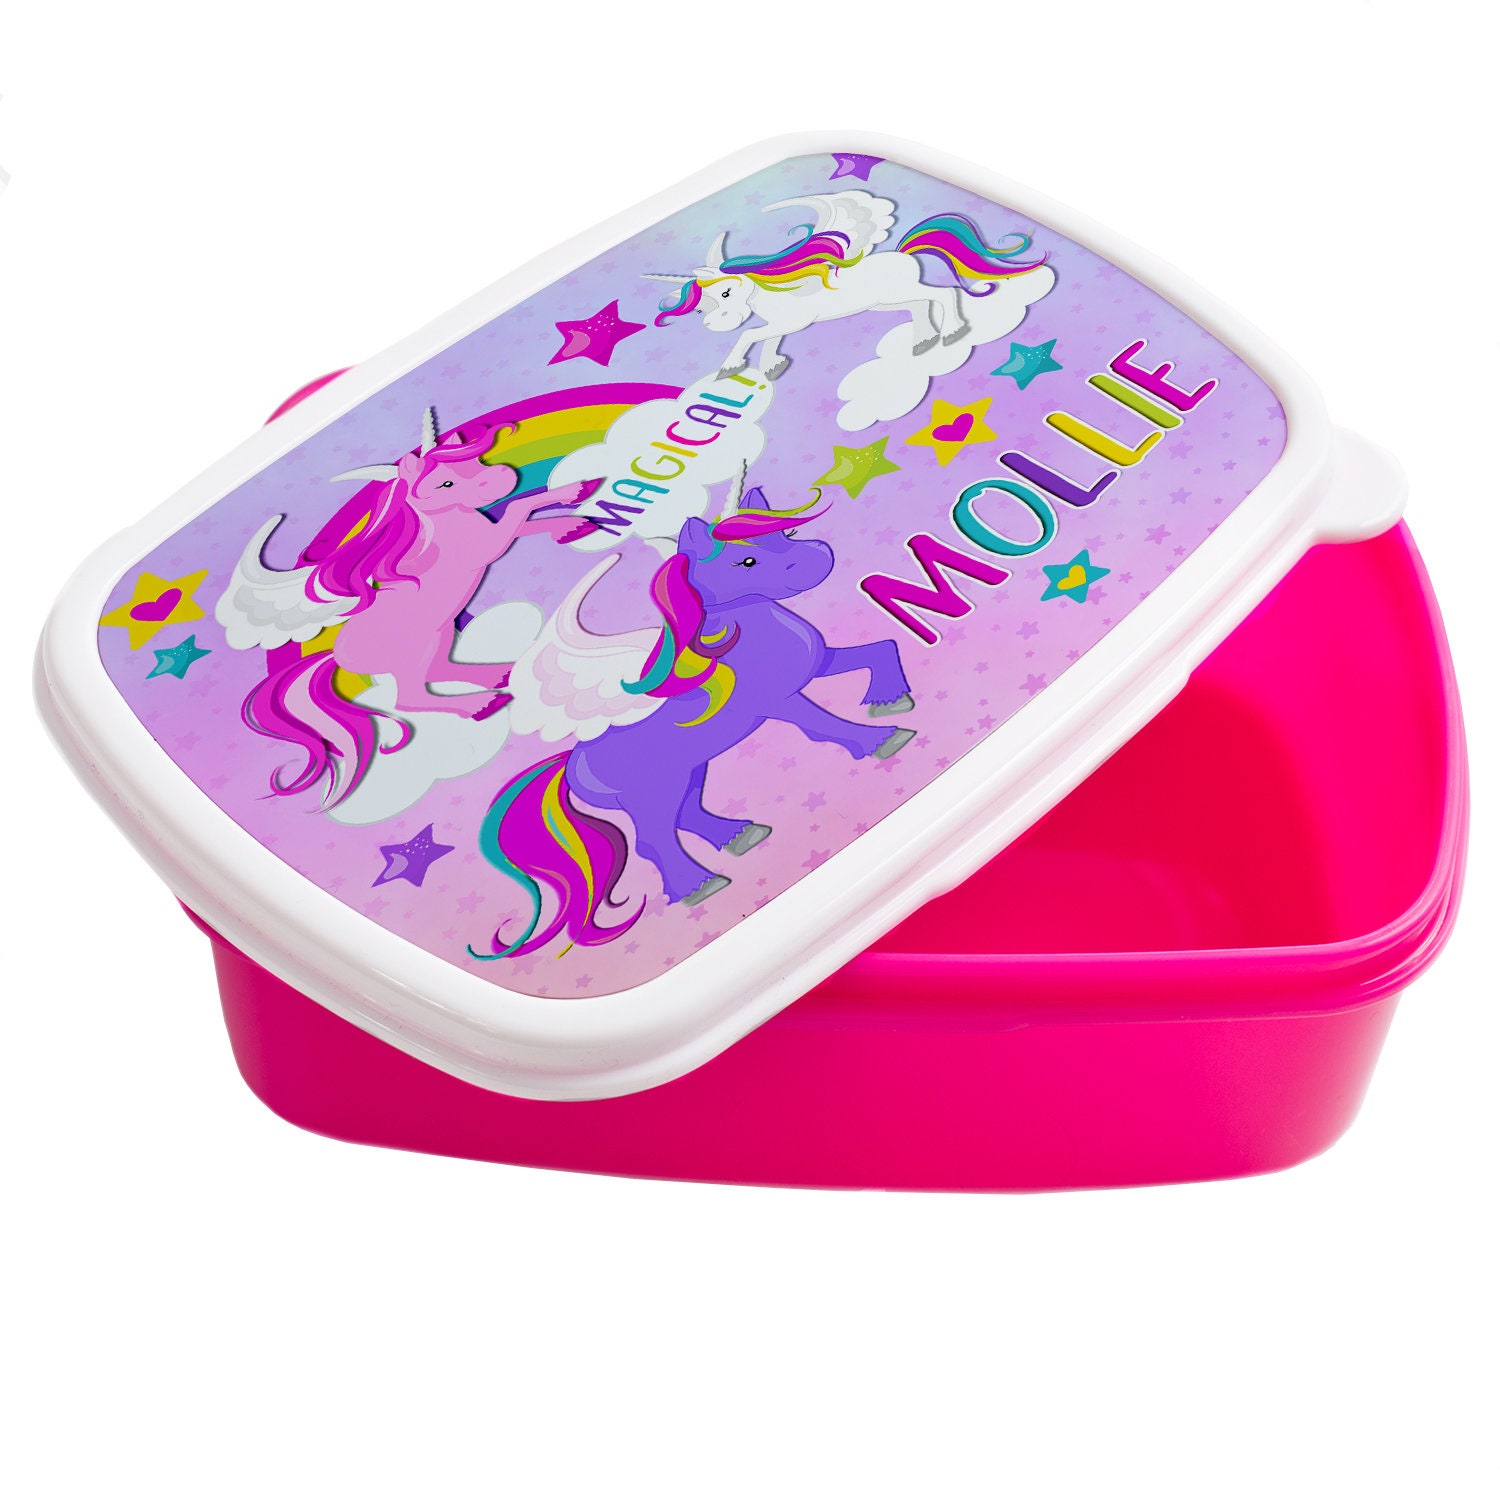 Keeli Kids Girls Pink Unicorn Lunch Box School Lunch Bag with